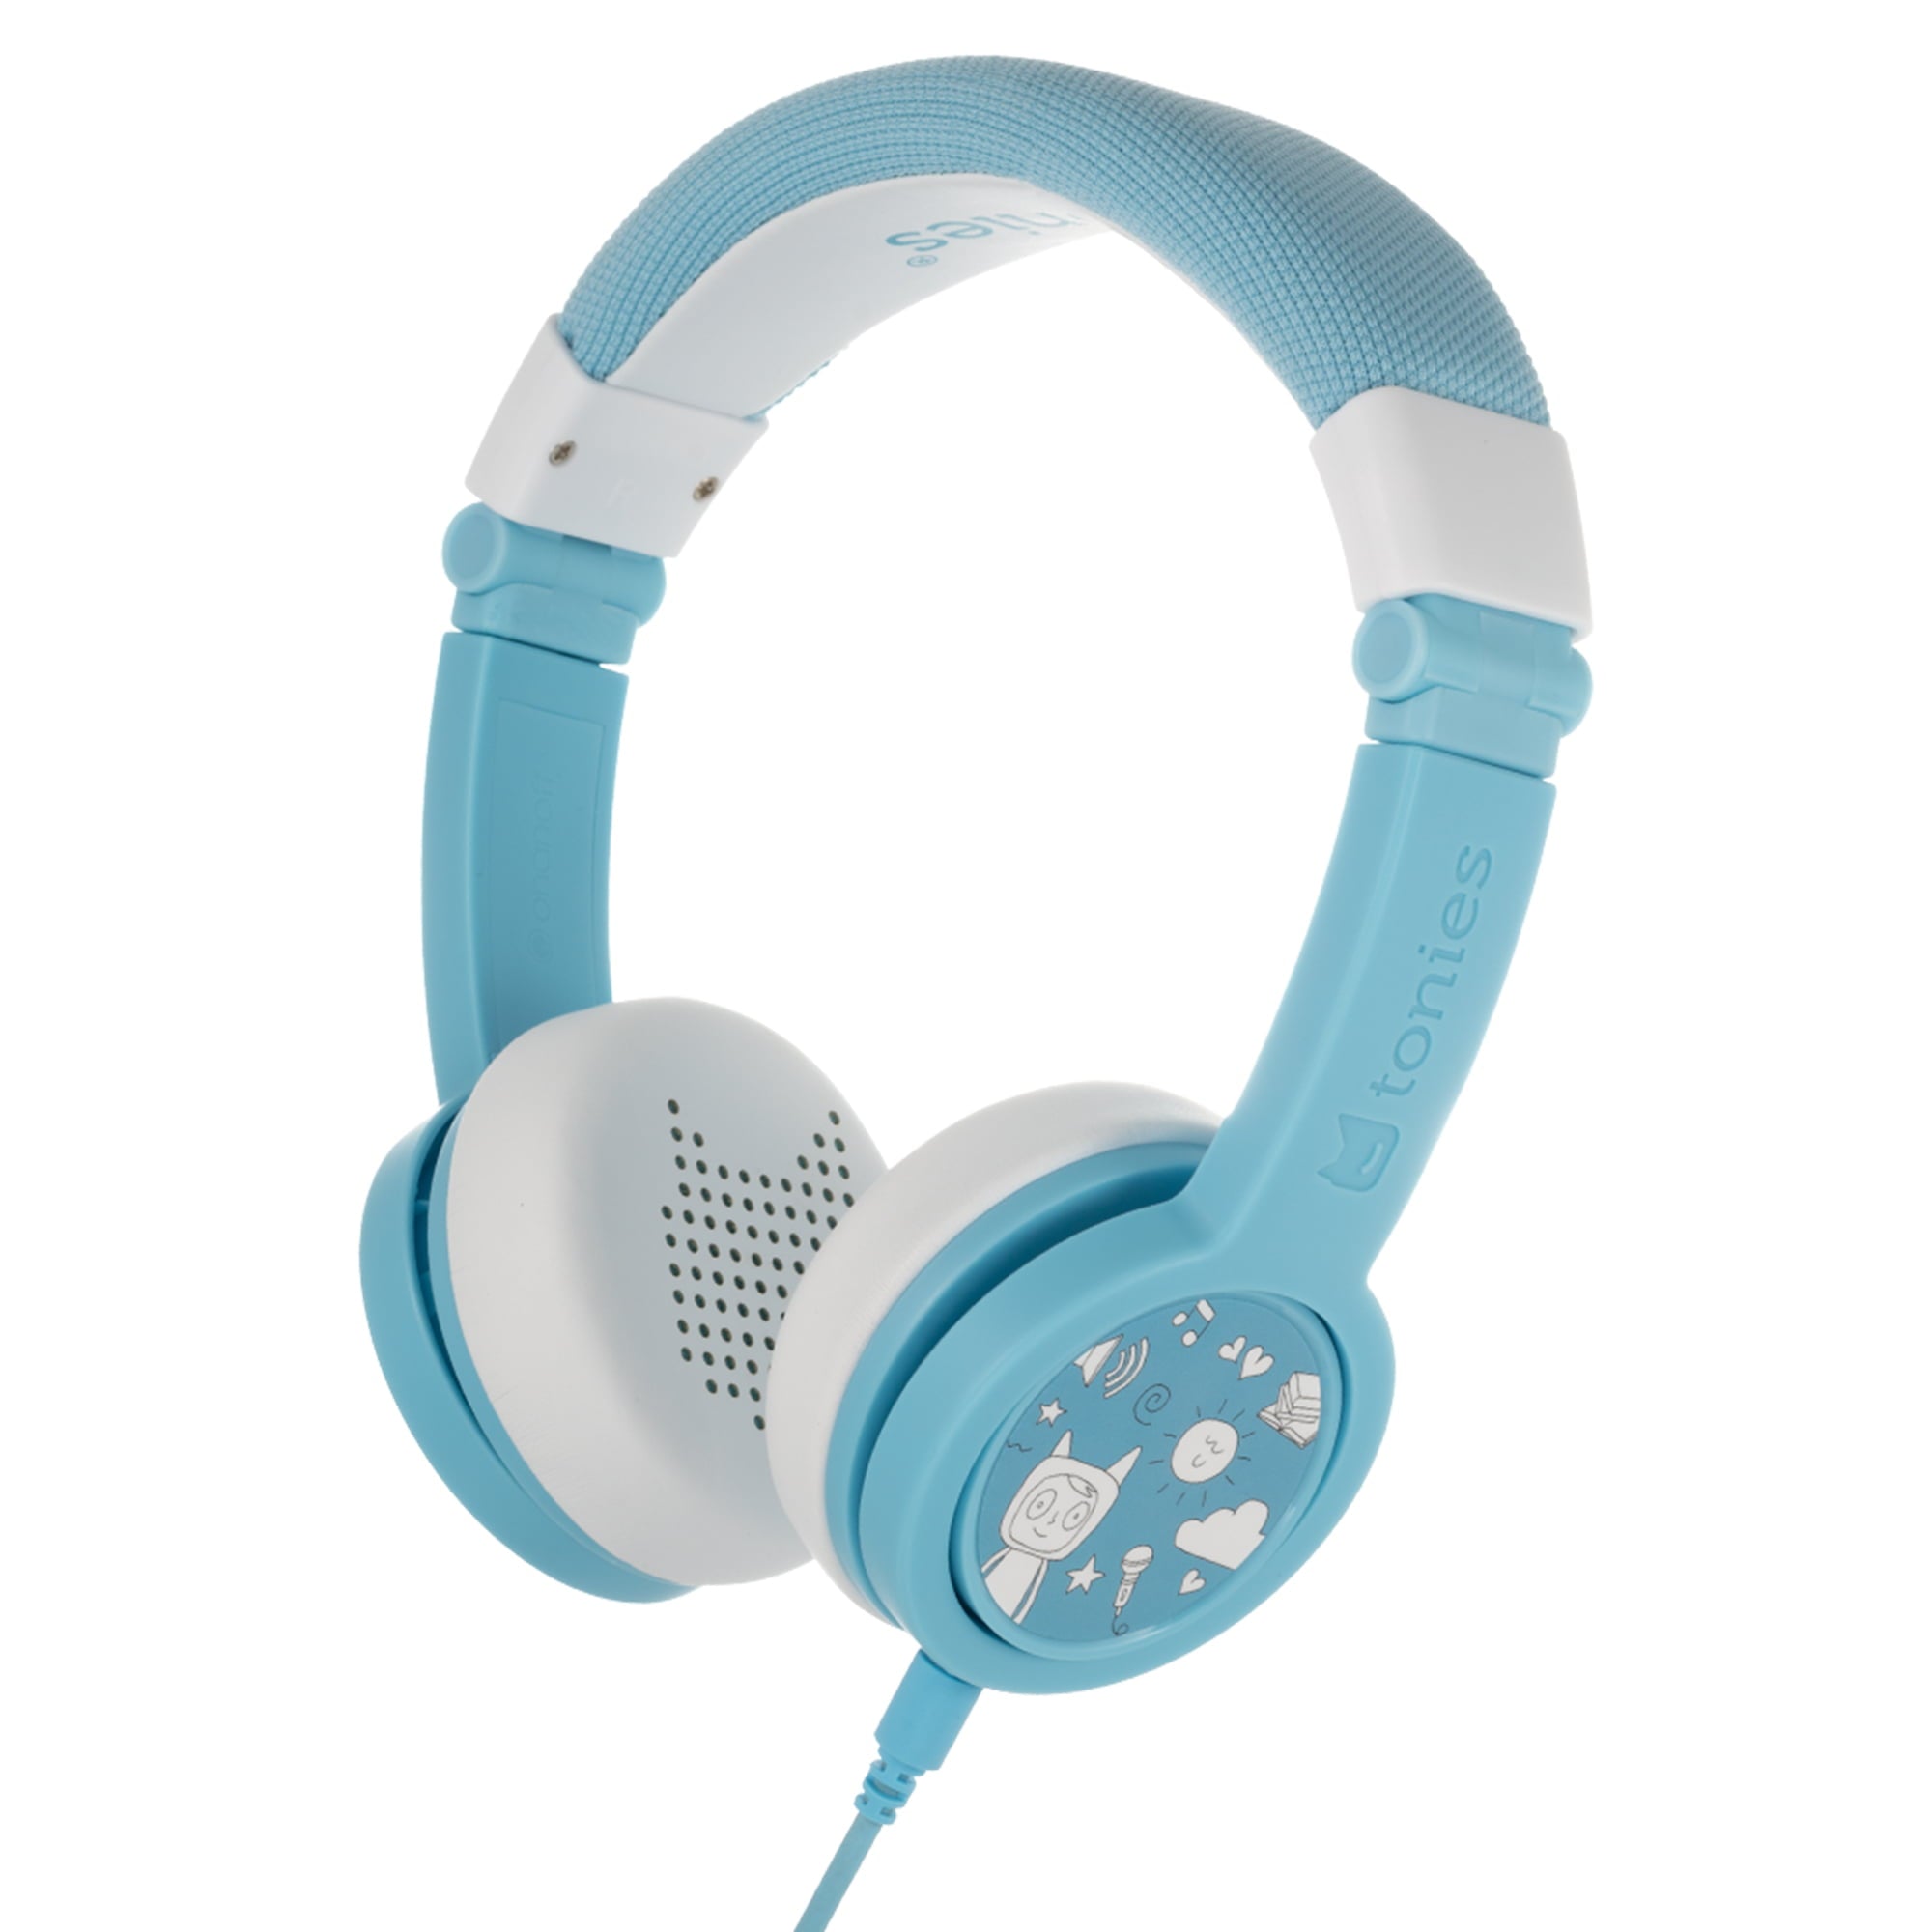 Tonies Foldable Headphones - ANB Baby -840173600283$20 - $50